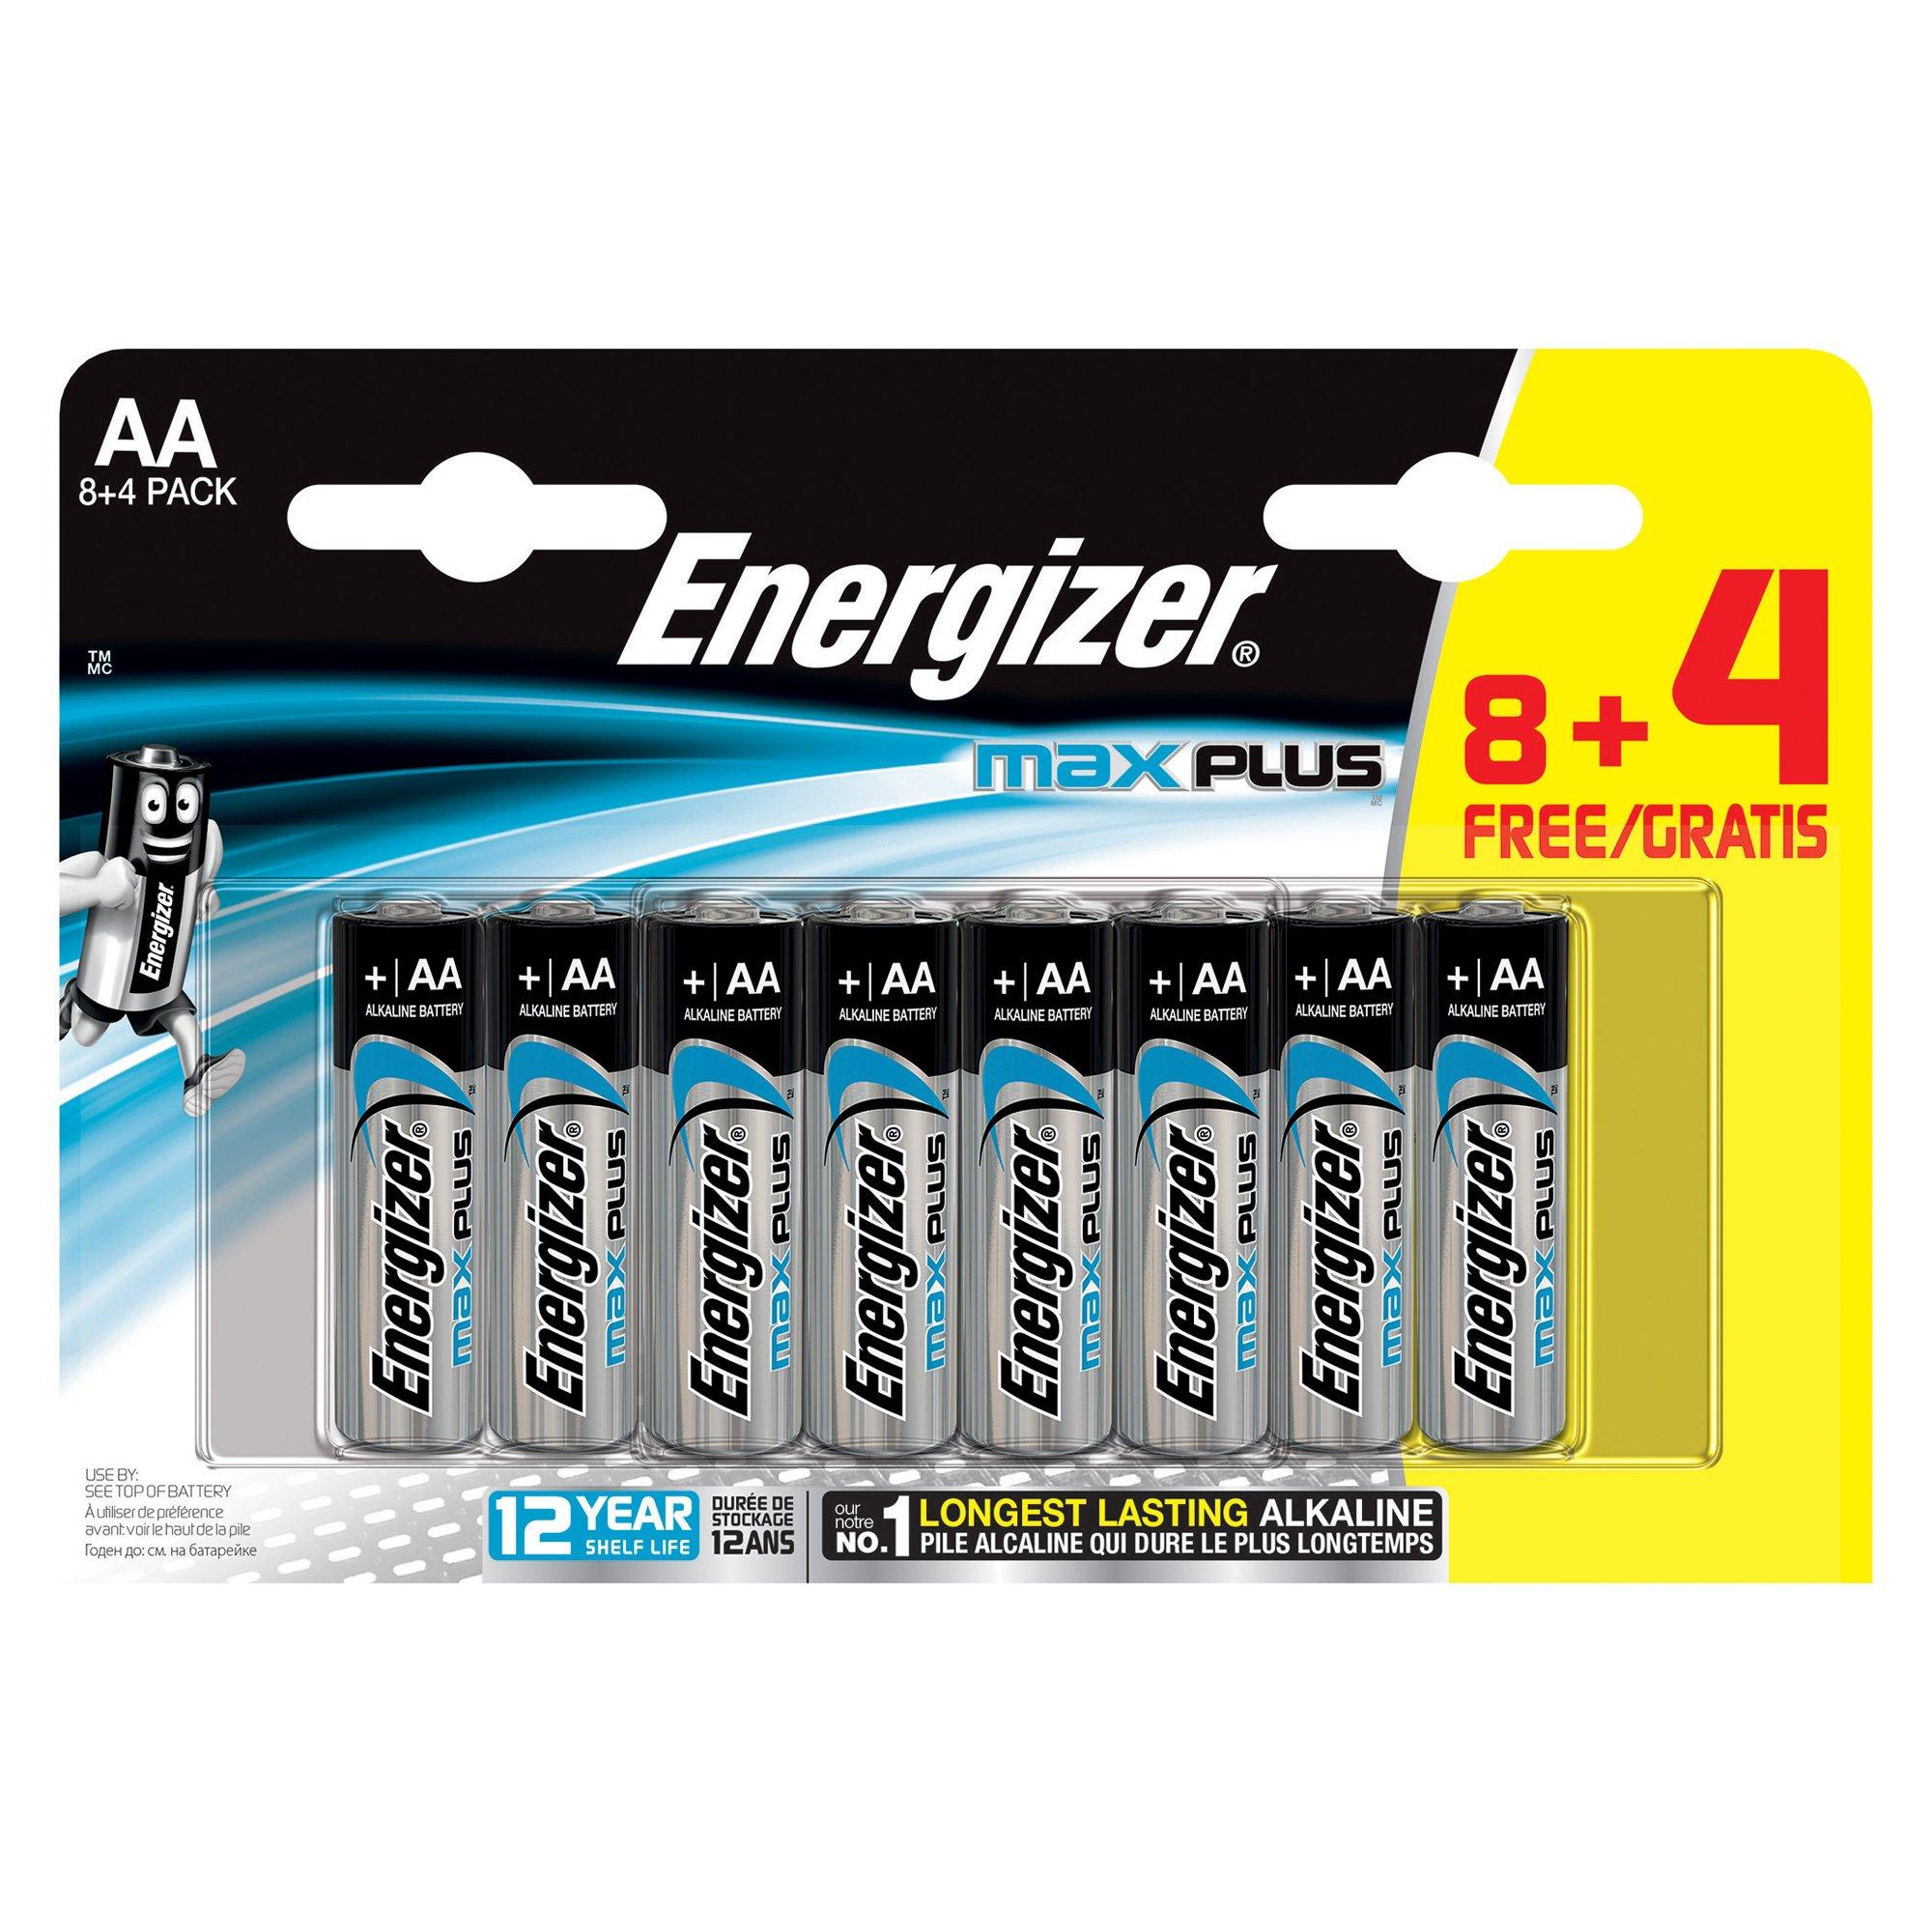 Energizer Max Plus (AA) Alkaline-Batterien, 8 + 4 Stück 